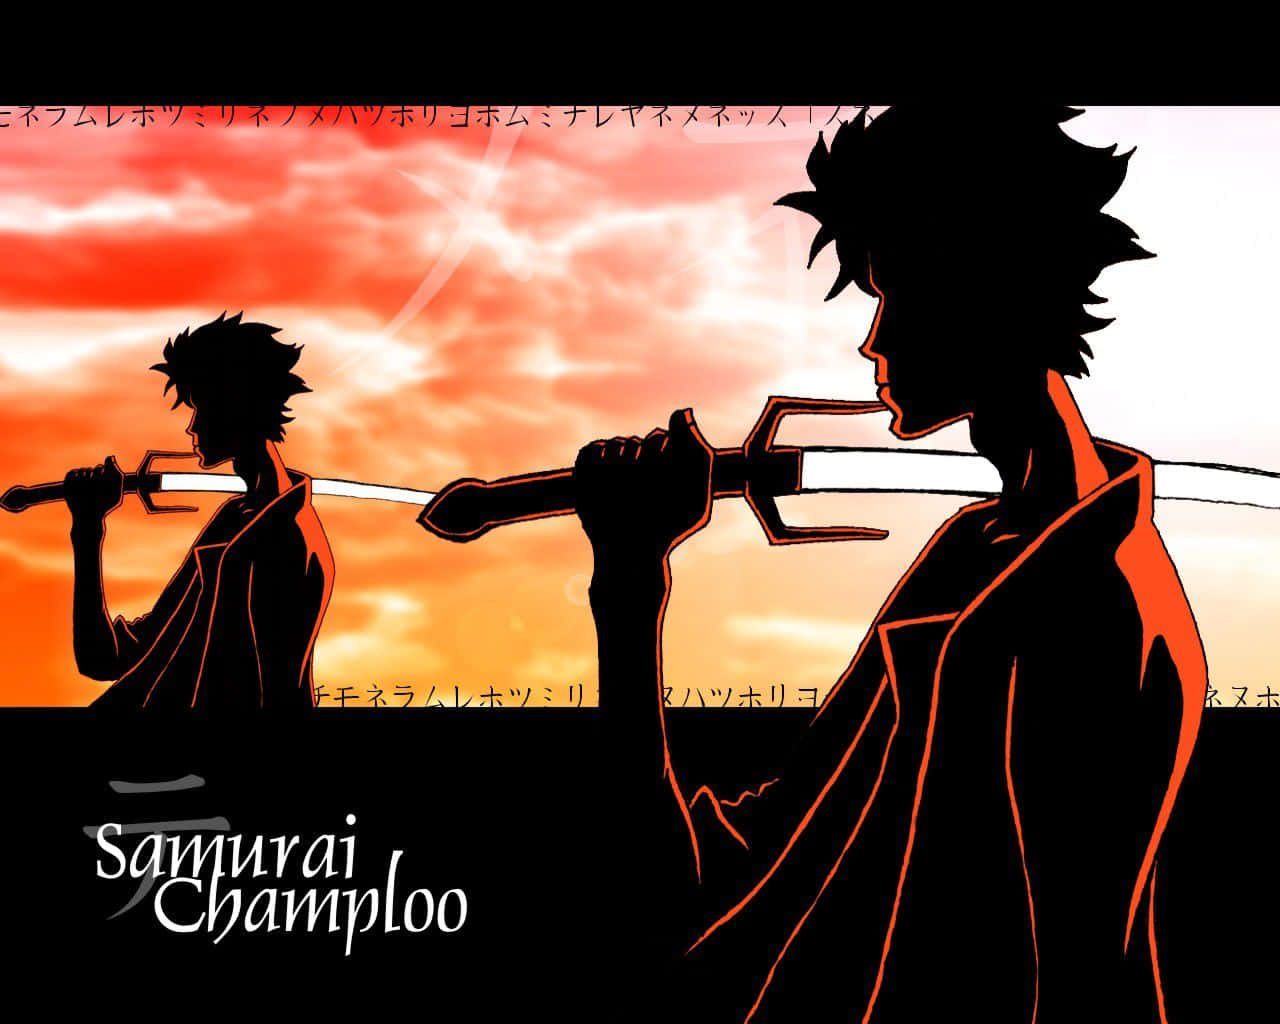 Two Samurai Champloo Characters Wielding Swords Wallpaper